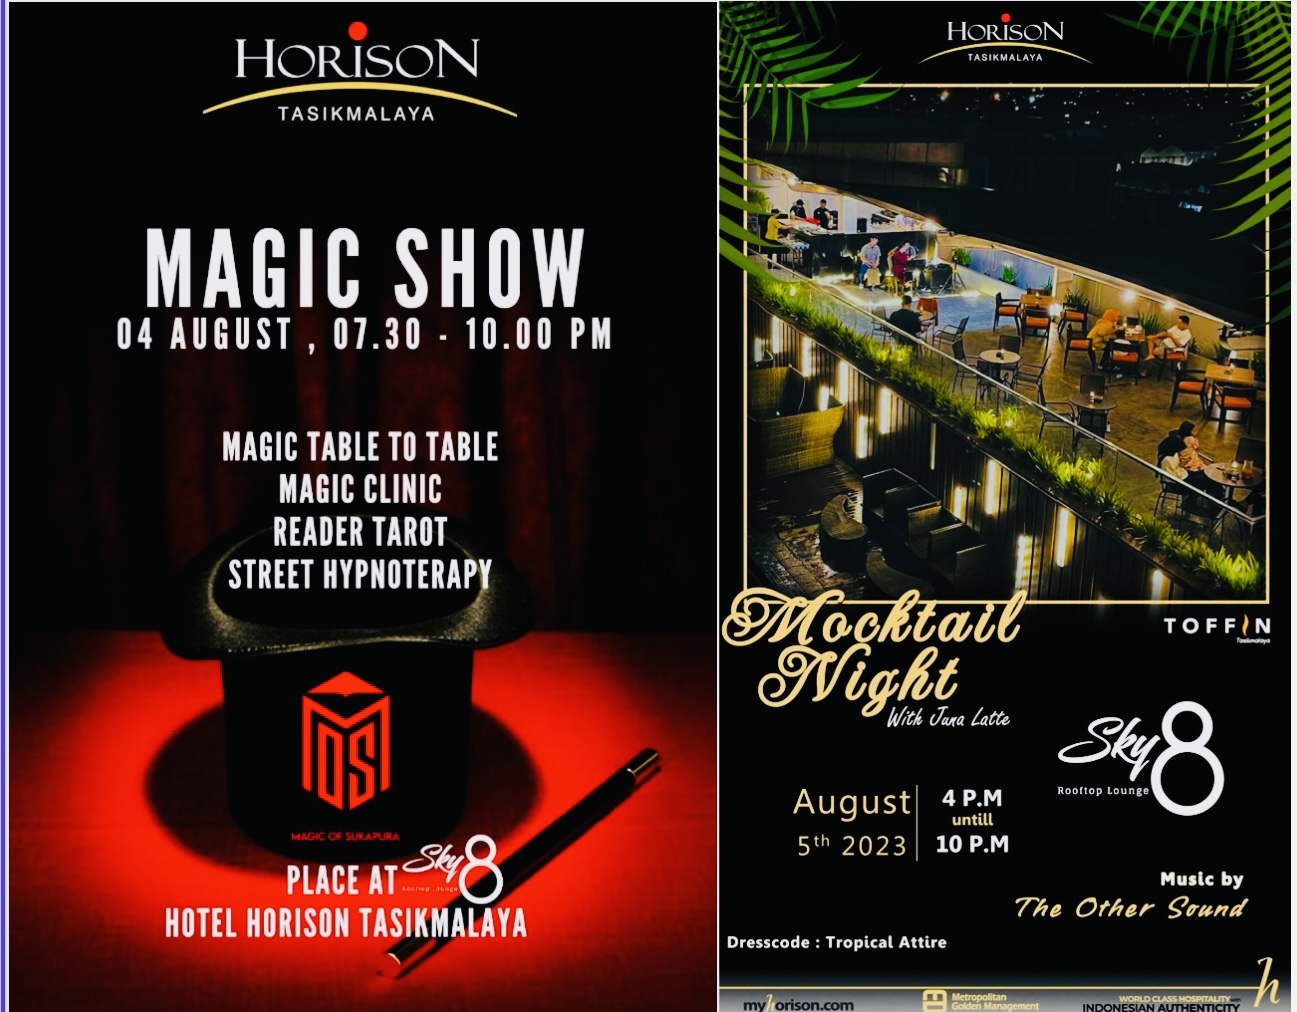 Hotel Horison Tasikmalaya Mempersembahkan Magic Show & Mocktail Night Sky8 Lounge